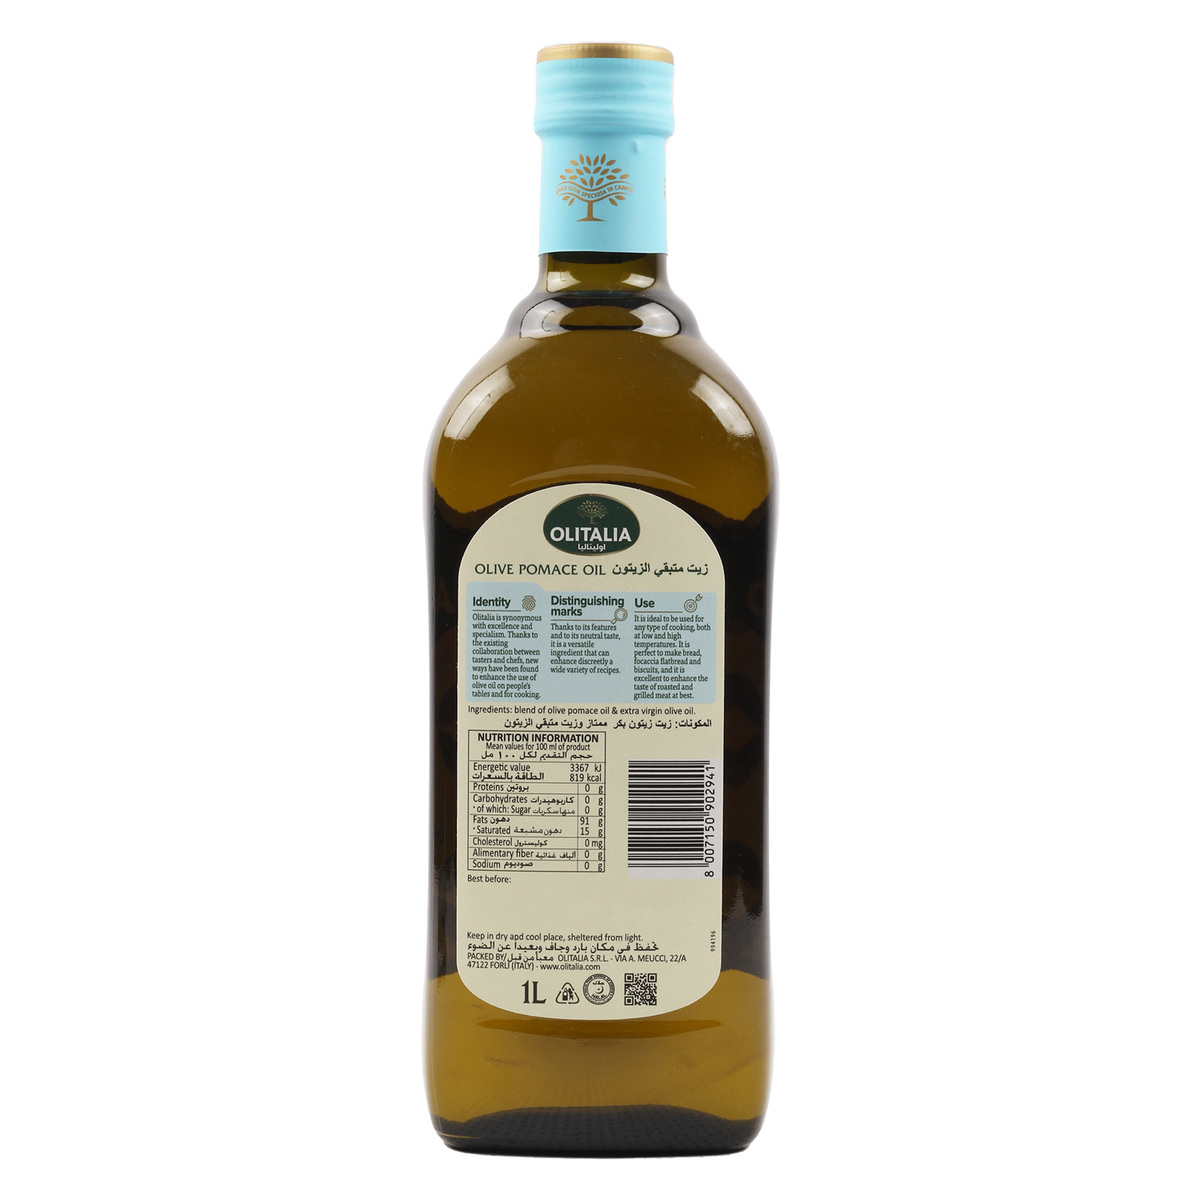 Olitalia Olive Pomace Oil 1Litre